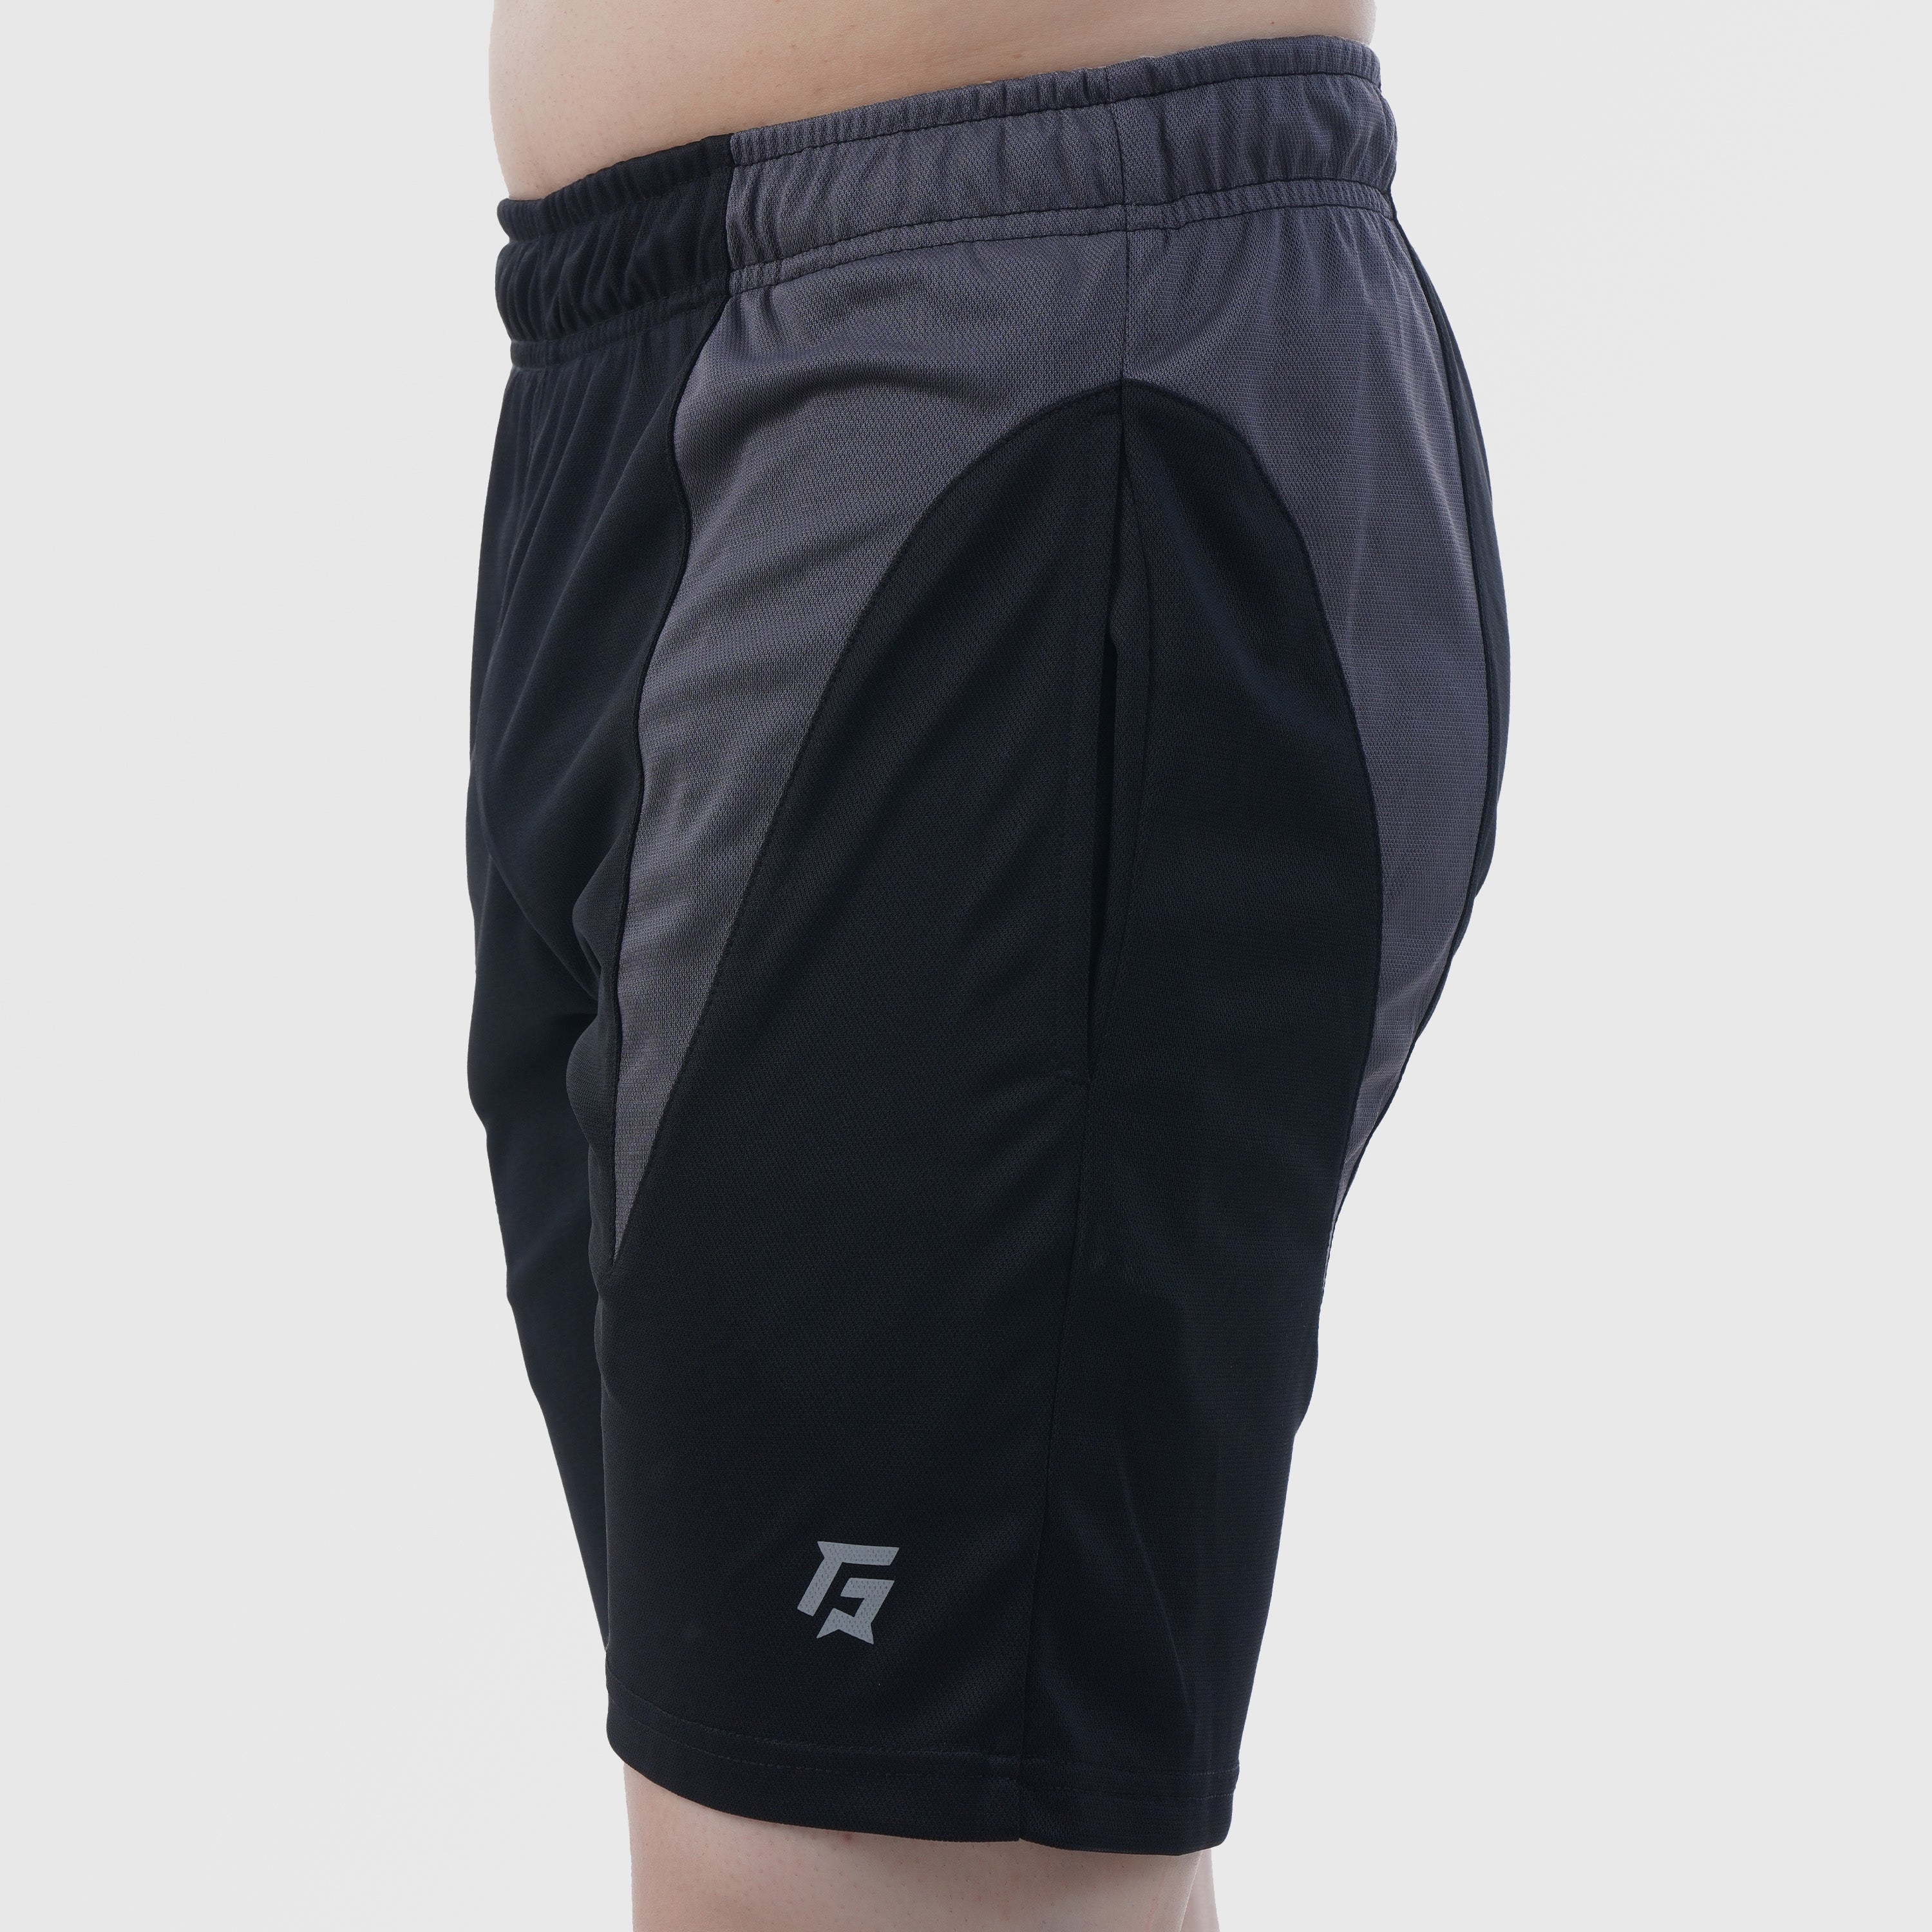 ActiveFlow Shorts (Black)